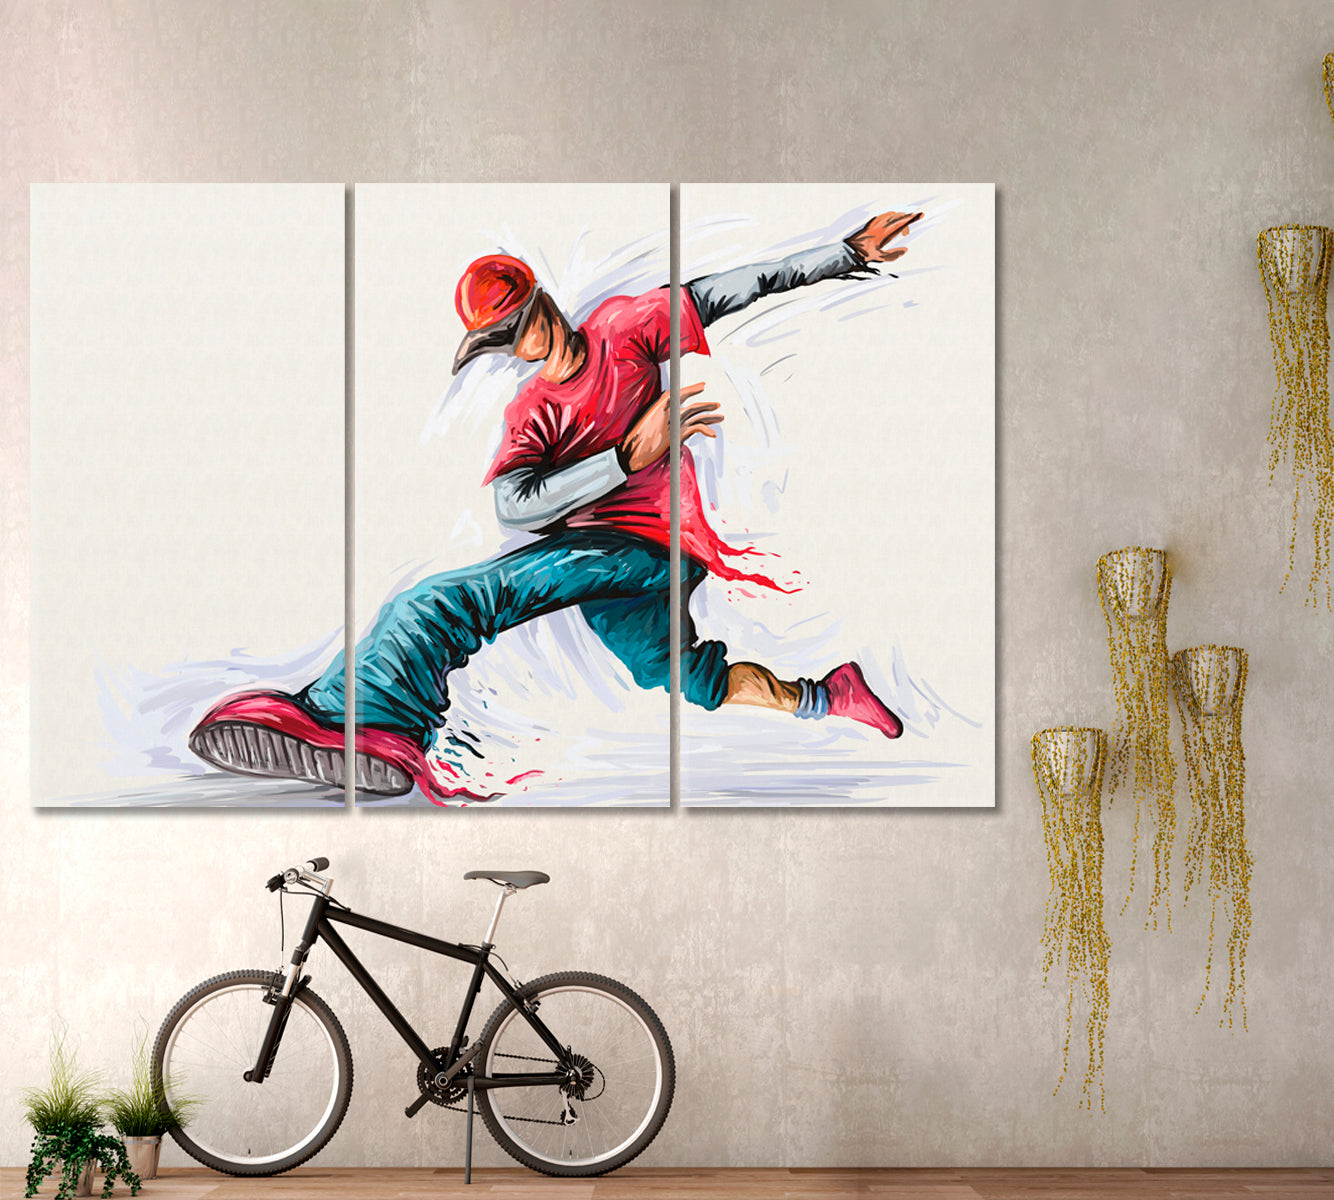 Boy Hip Hop Dance Rap Music Kids Teenager Active Life Concept Fine Art Canvas Print Kids Room Canvas Art Print Artesty 3 panels 36" x 24" 